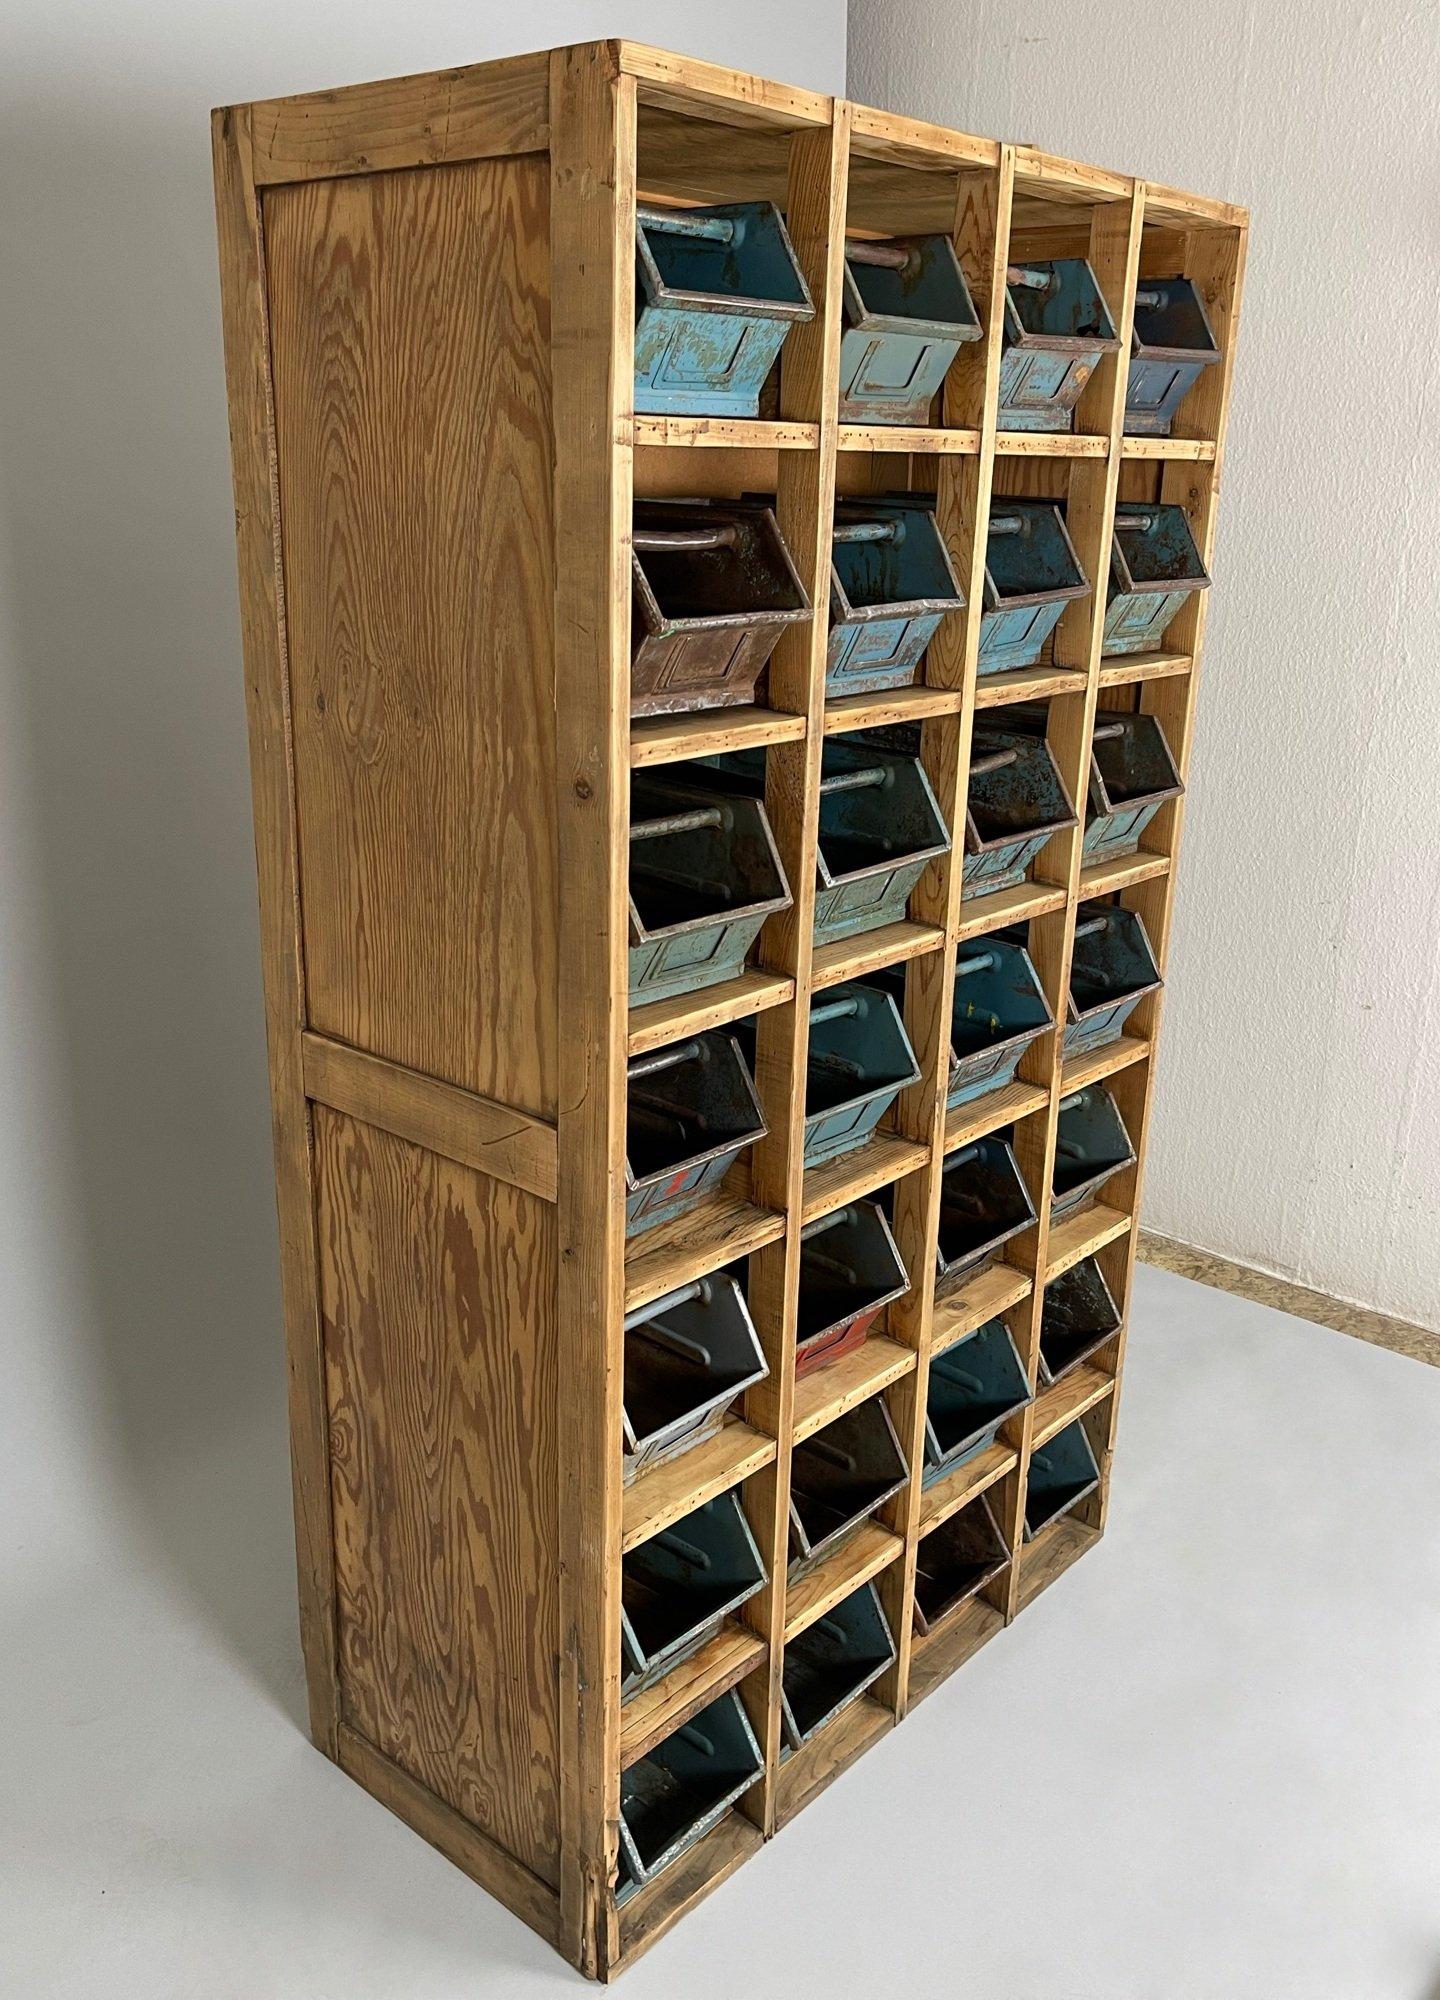 Czech Vintage Industrial Storage Cabinet For Sale